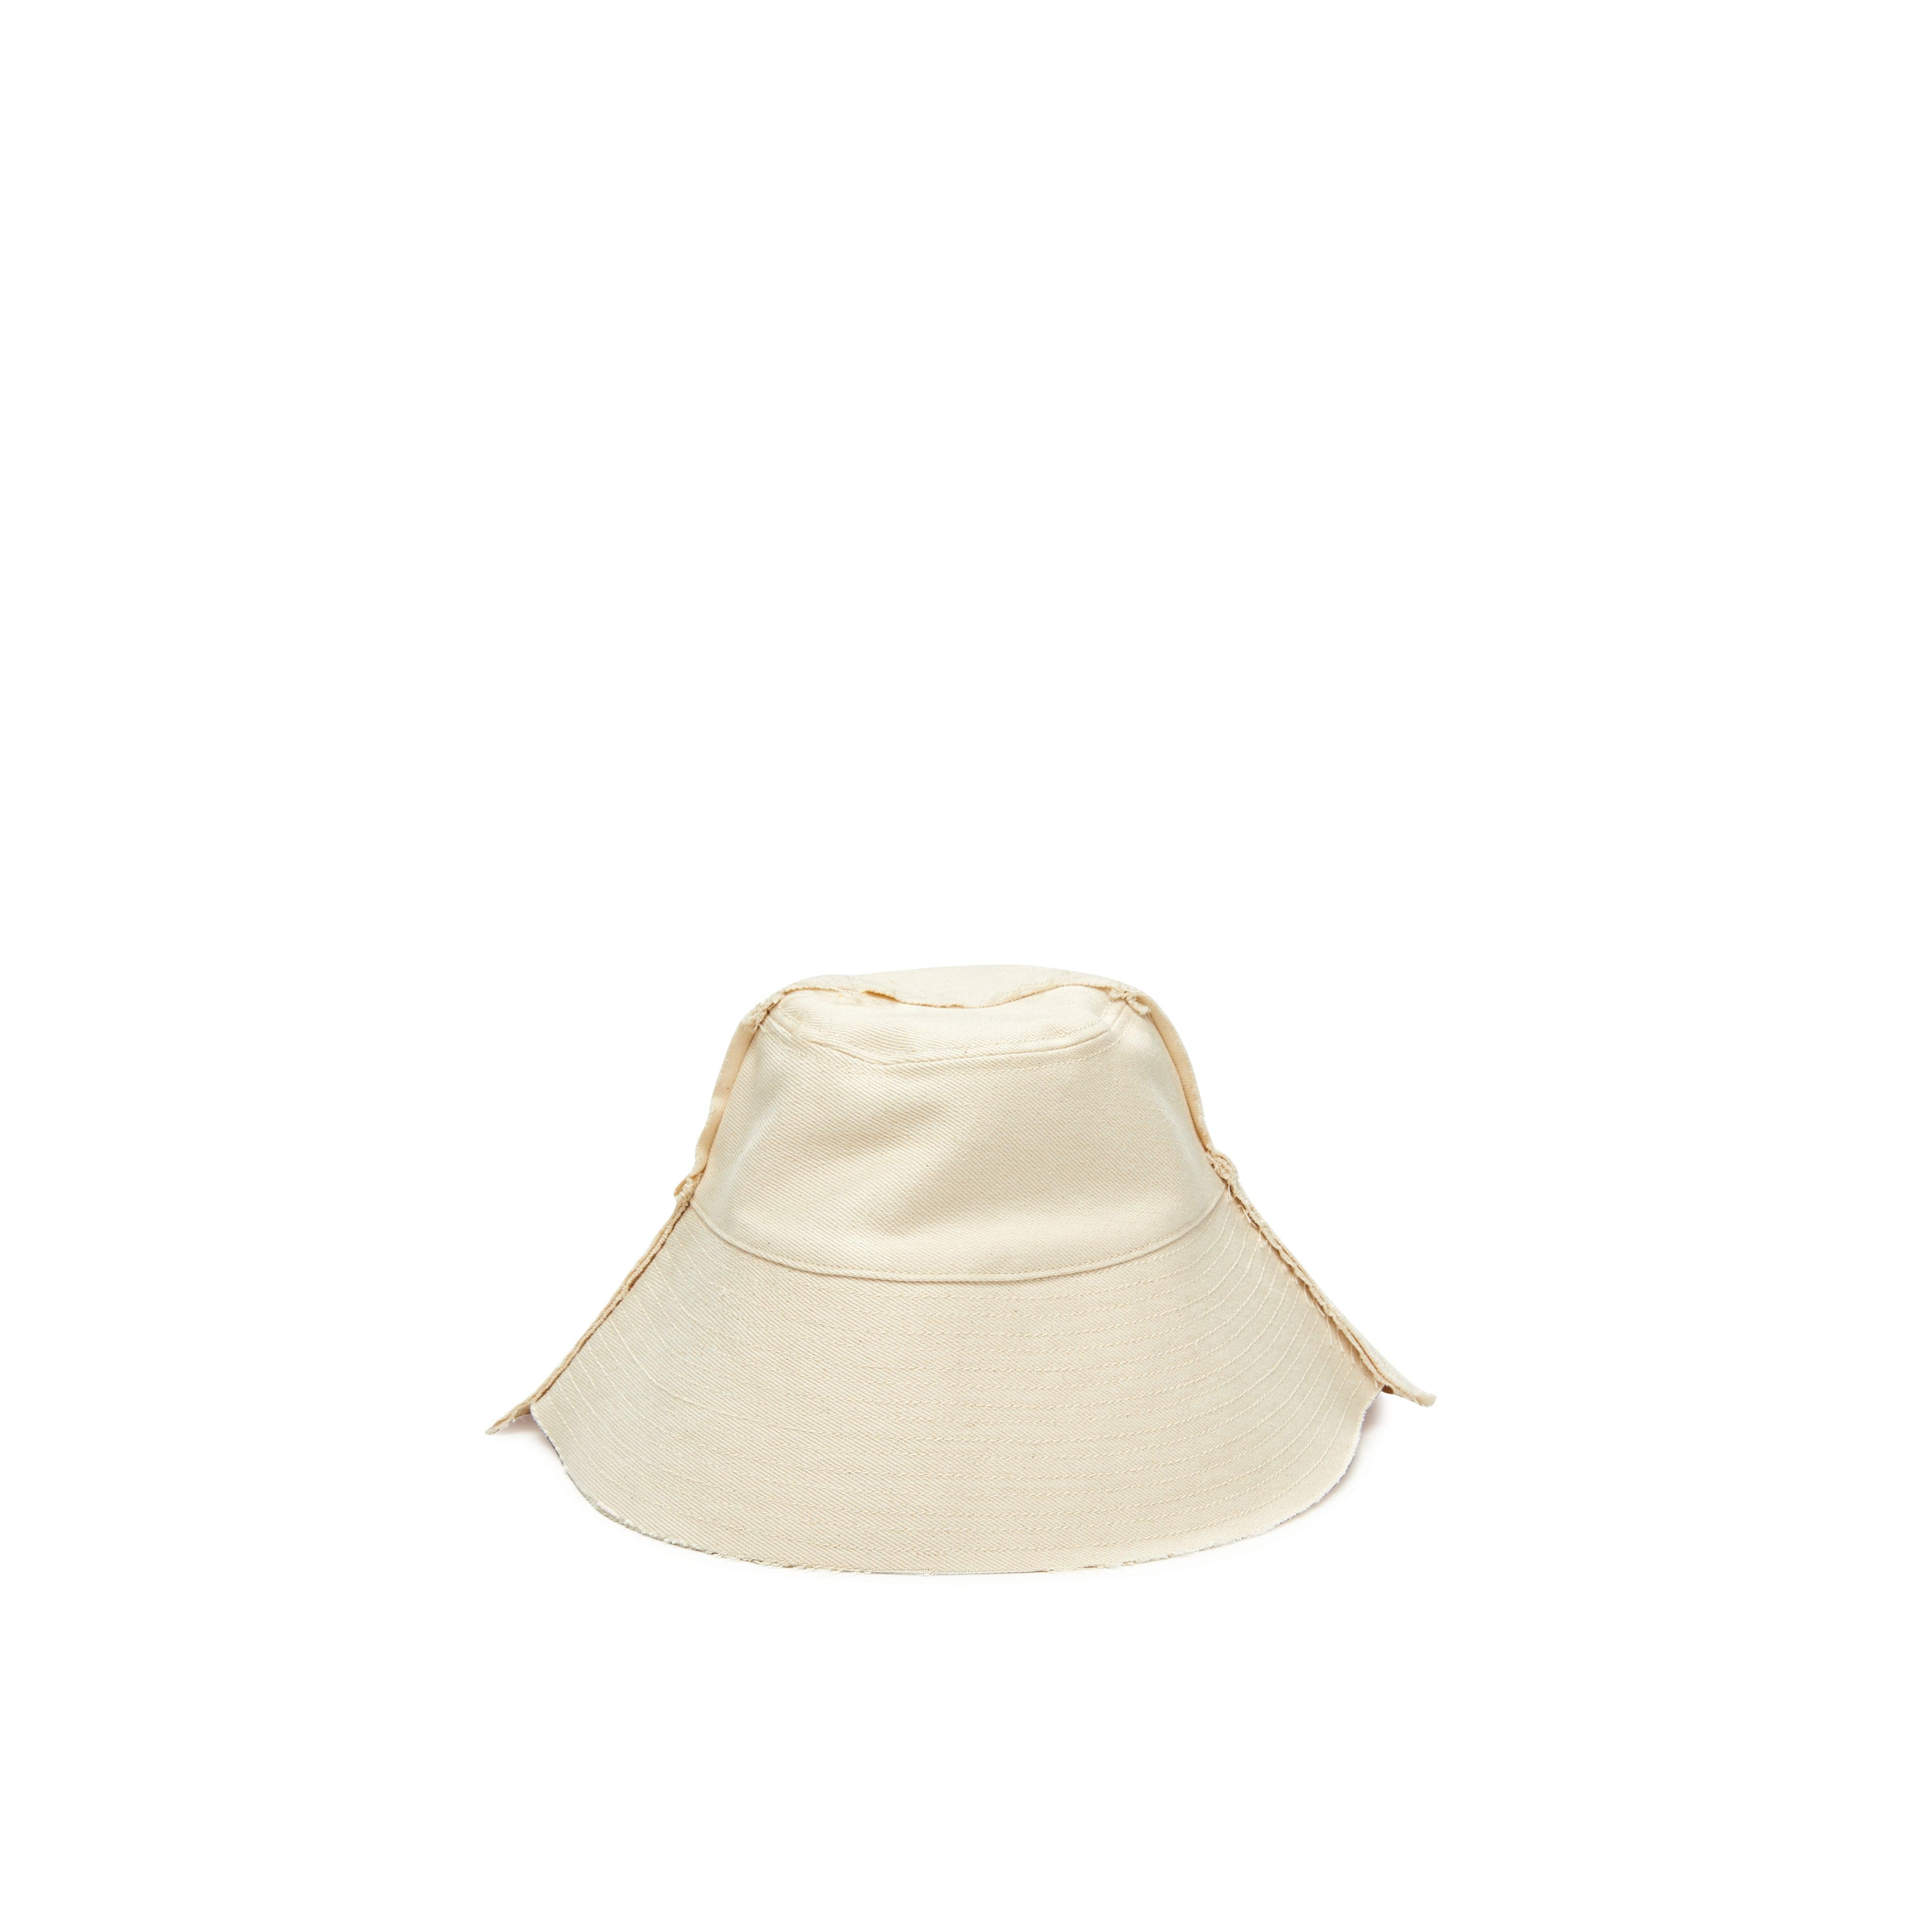 Airei Men's Deconstructed Denim Bucket Hat (Natural) by AIREI